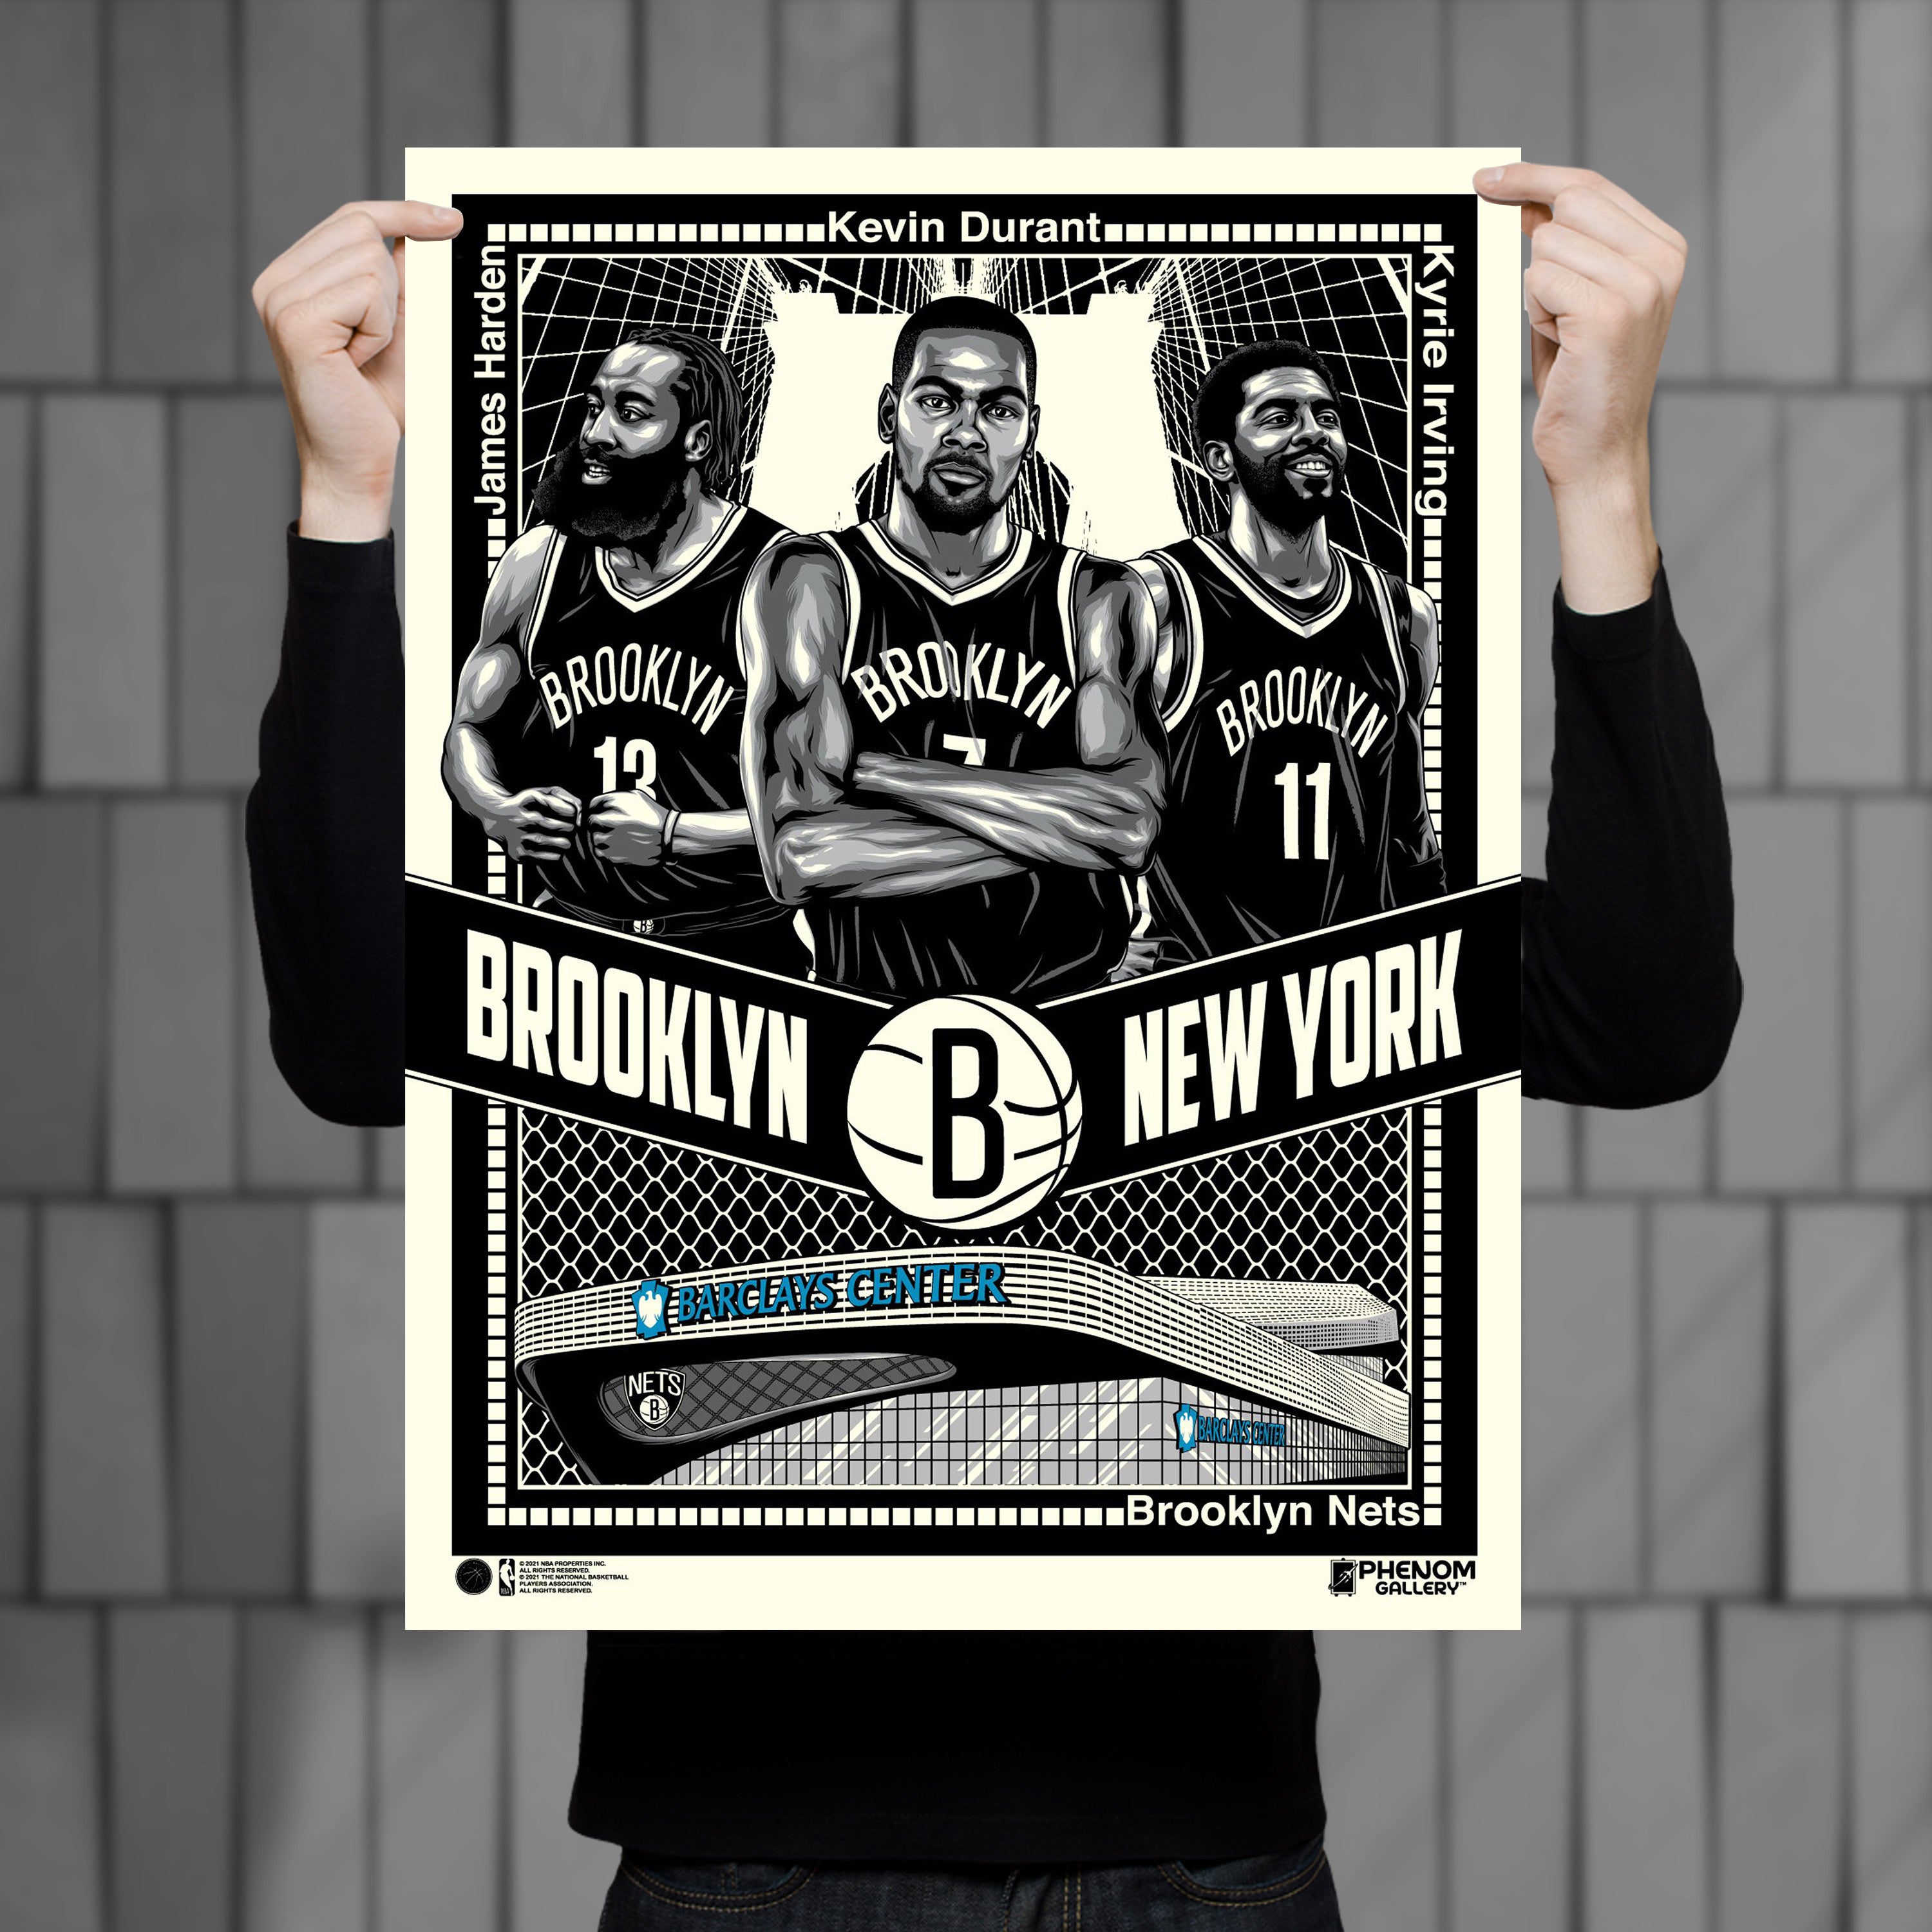 Kevin Durant Brooklyn Nets by Artstudio 93